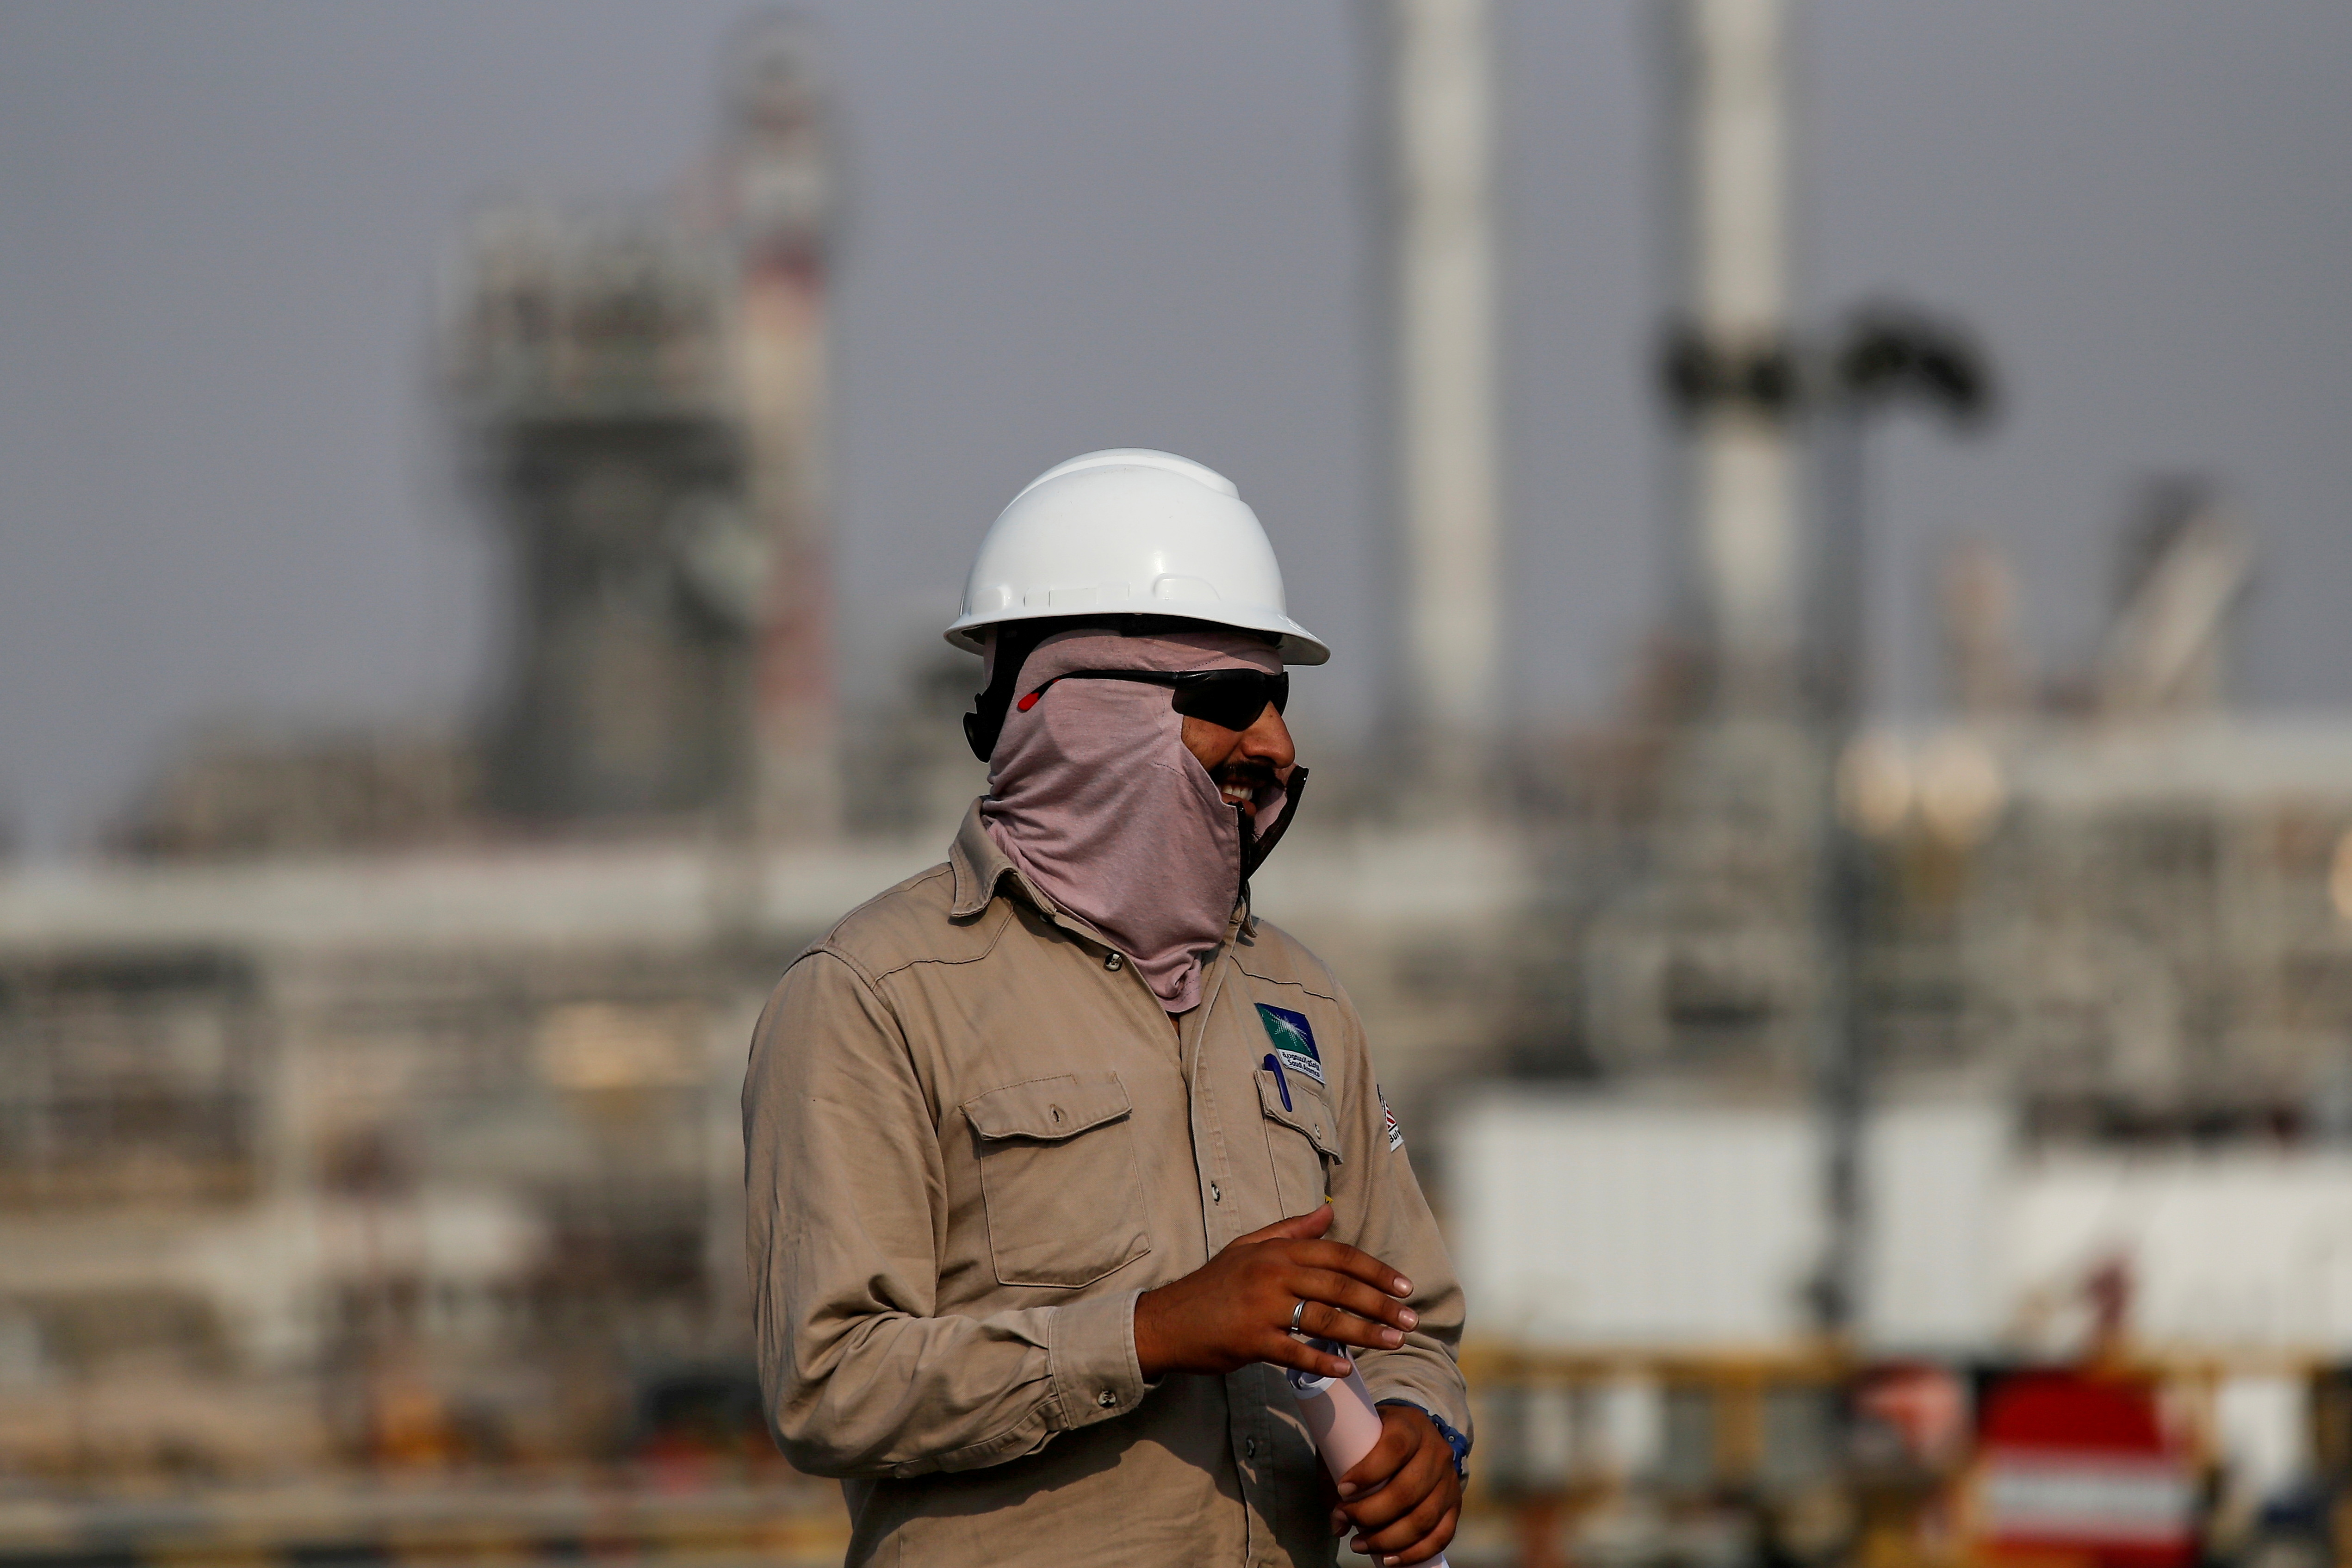 An employee looks on at Saudi Aramco oil facility in Abqaiq